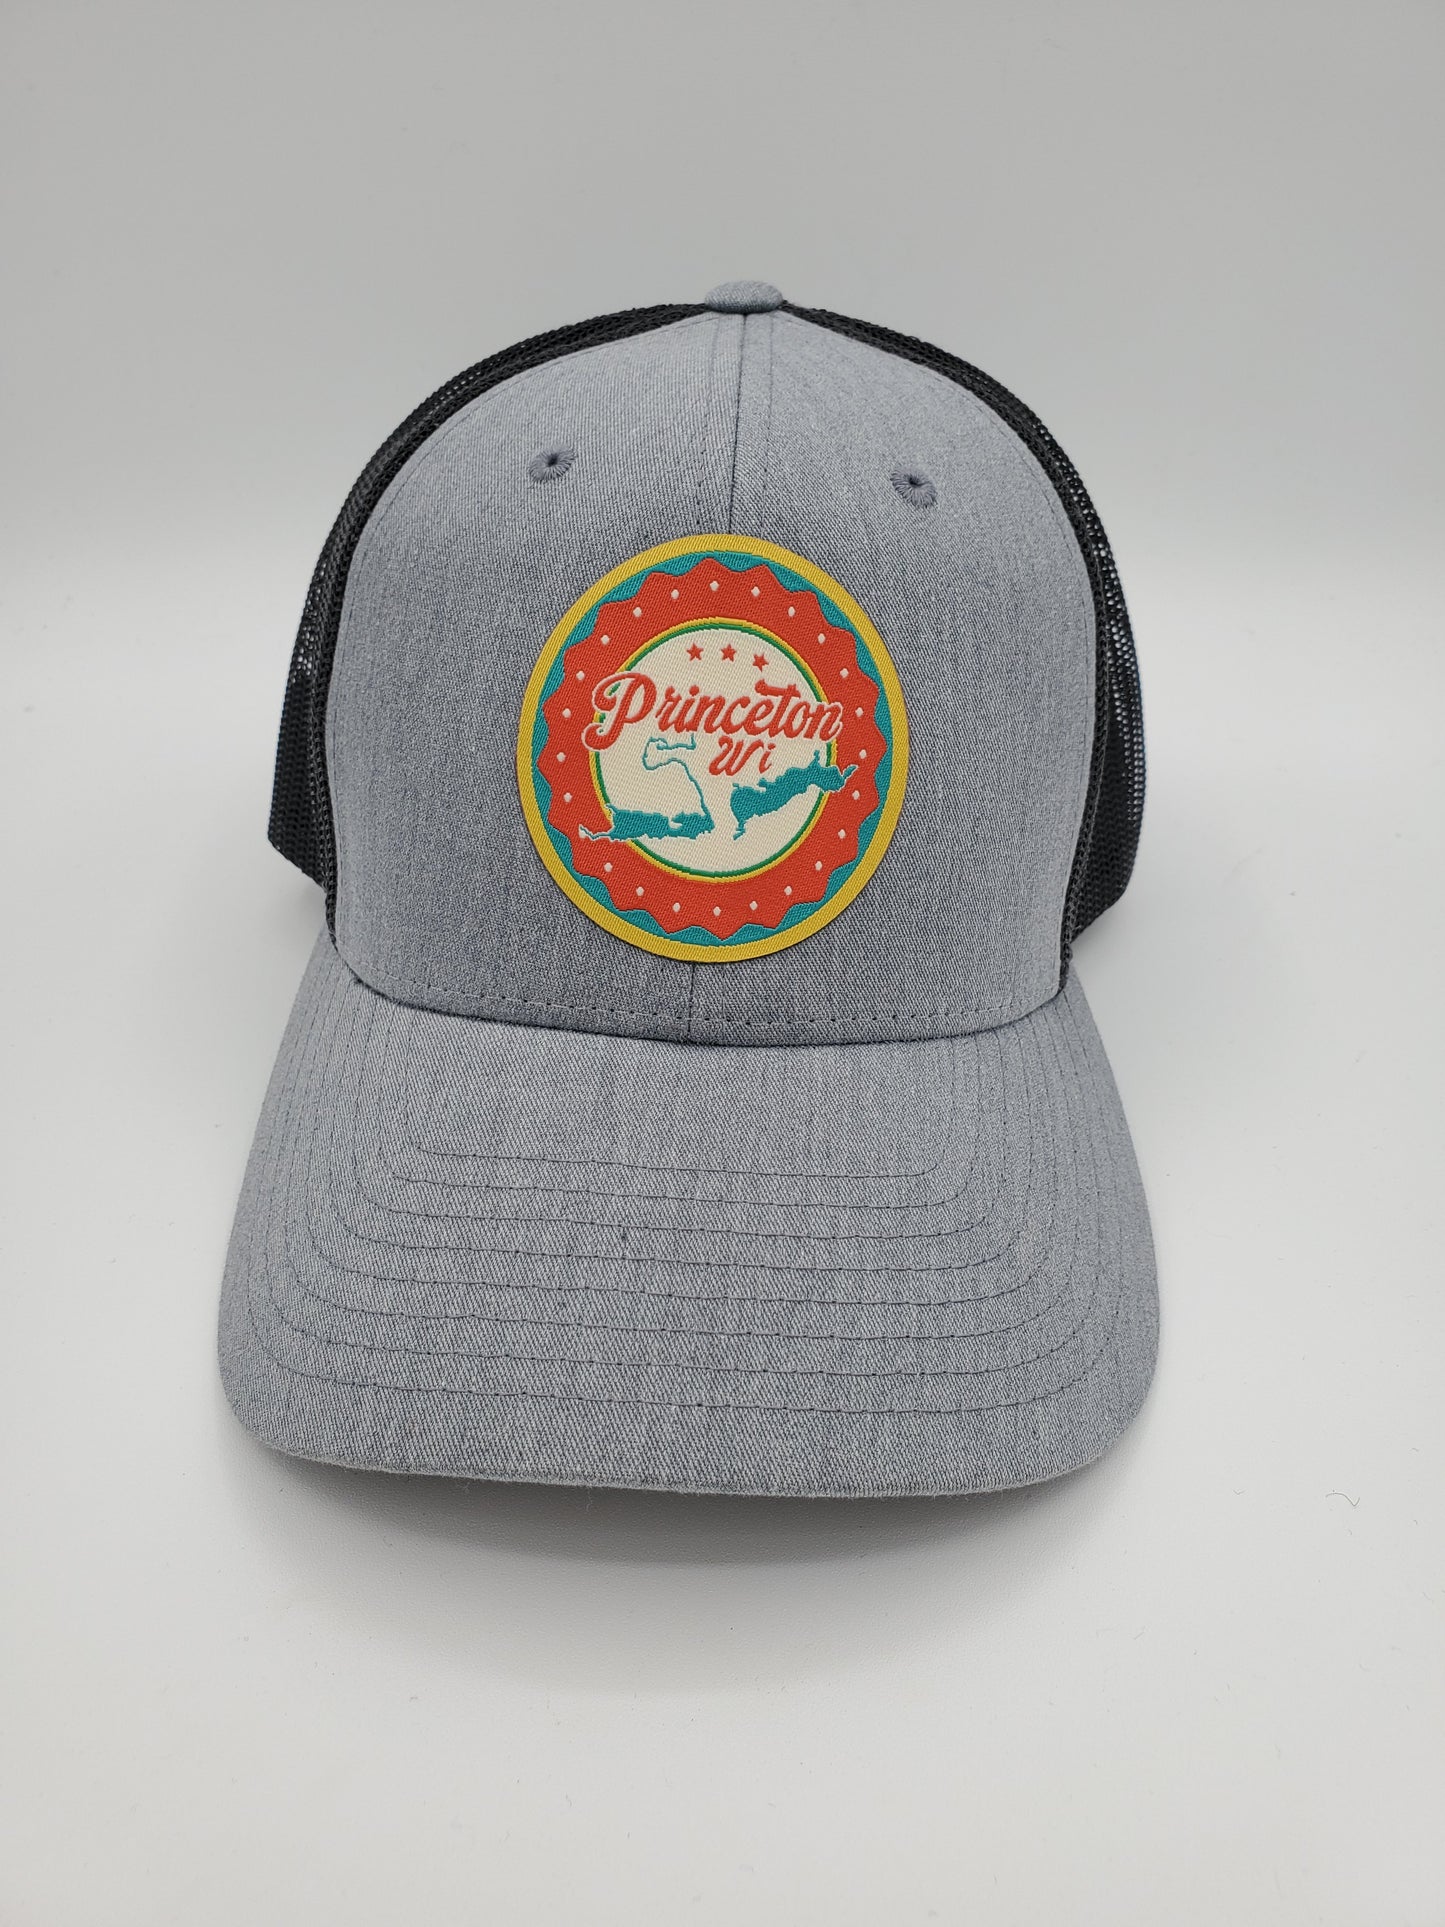 "Princeton, WI" Lake Design Trucker Hat (Black Mesh/ Heather Grey Fabric)